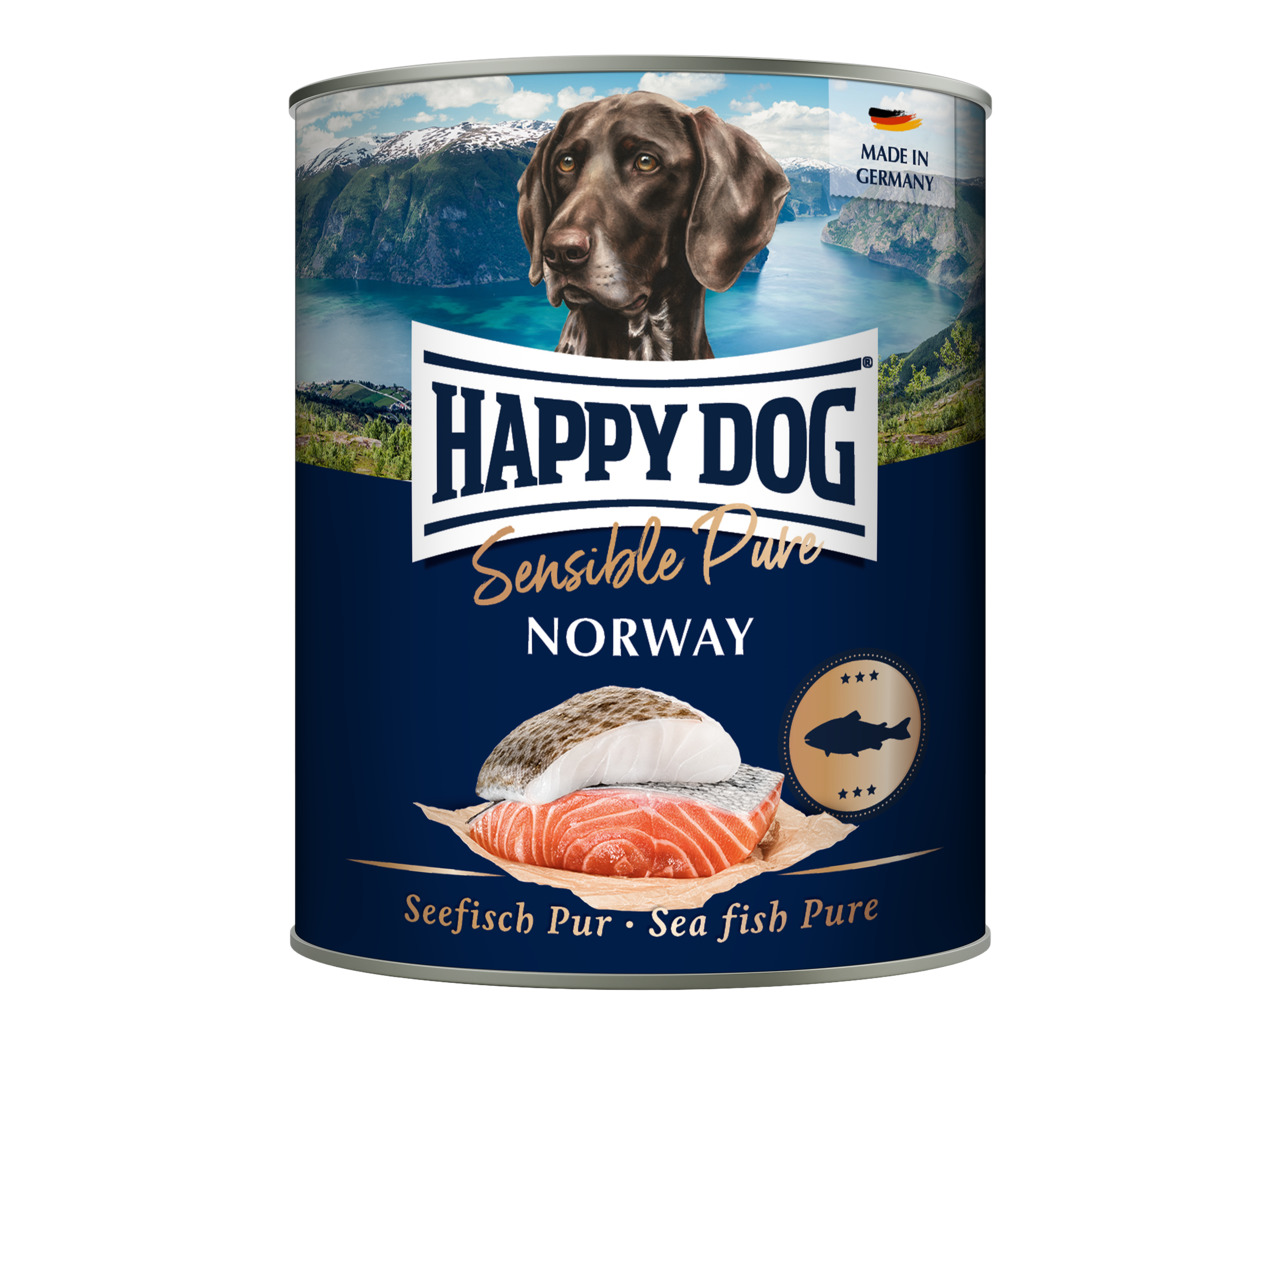 Happy Dog Sensible Pure Norway Seefisch Pur Hunde Nassfutter 800 g